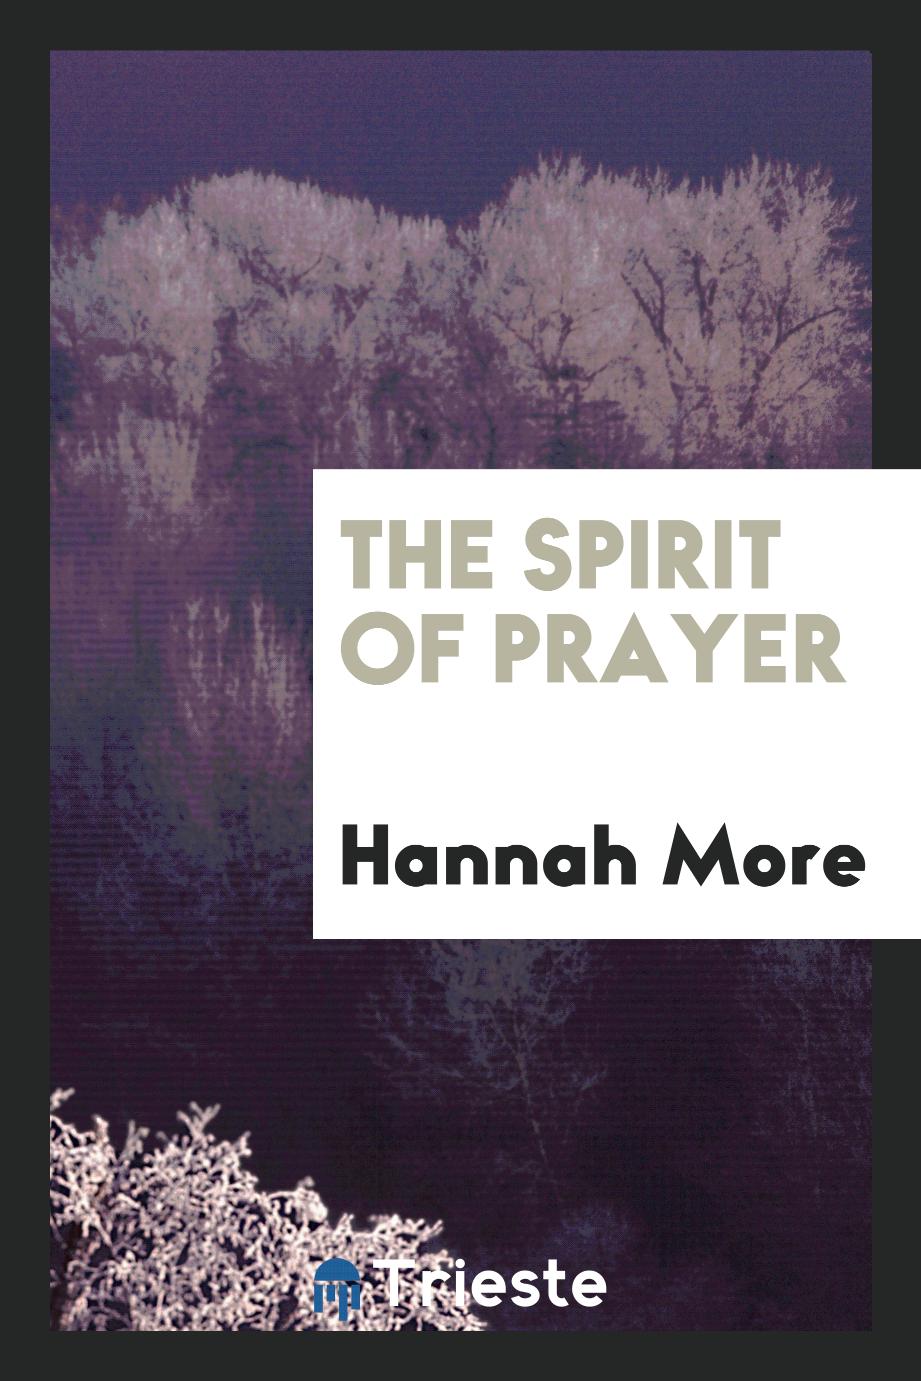 The spirit of prayer